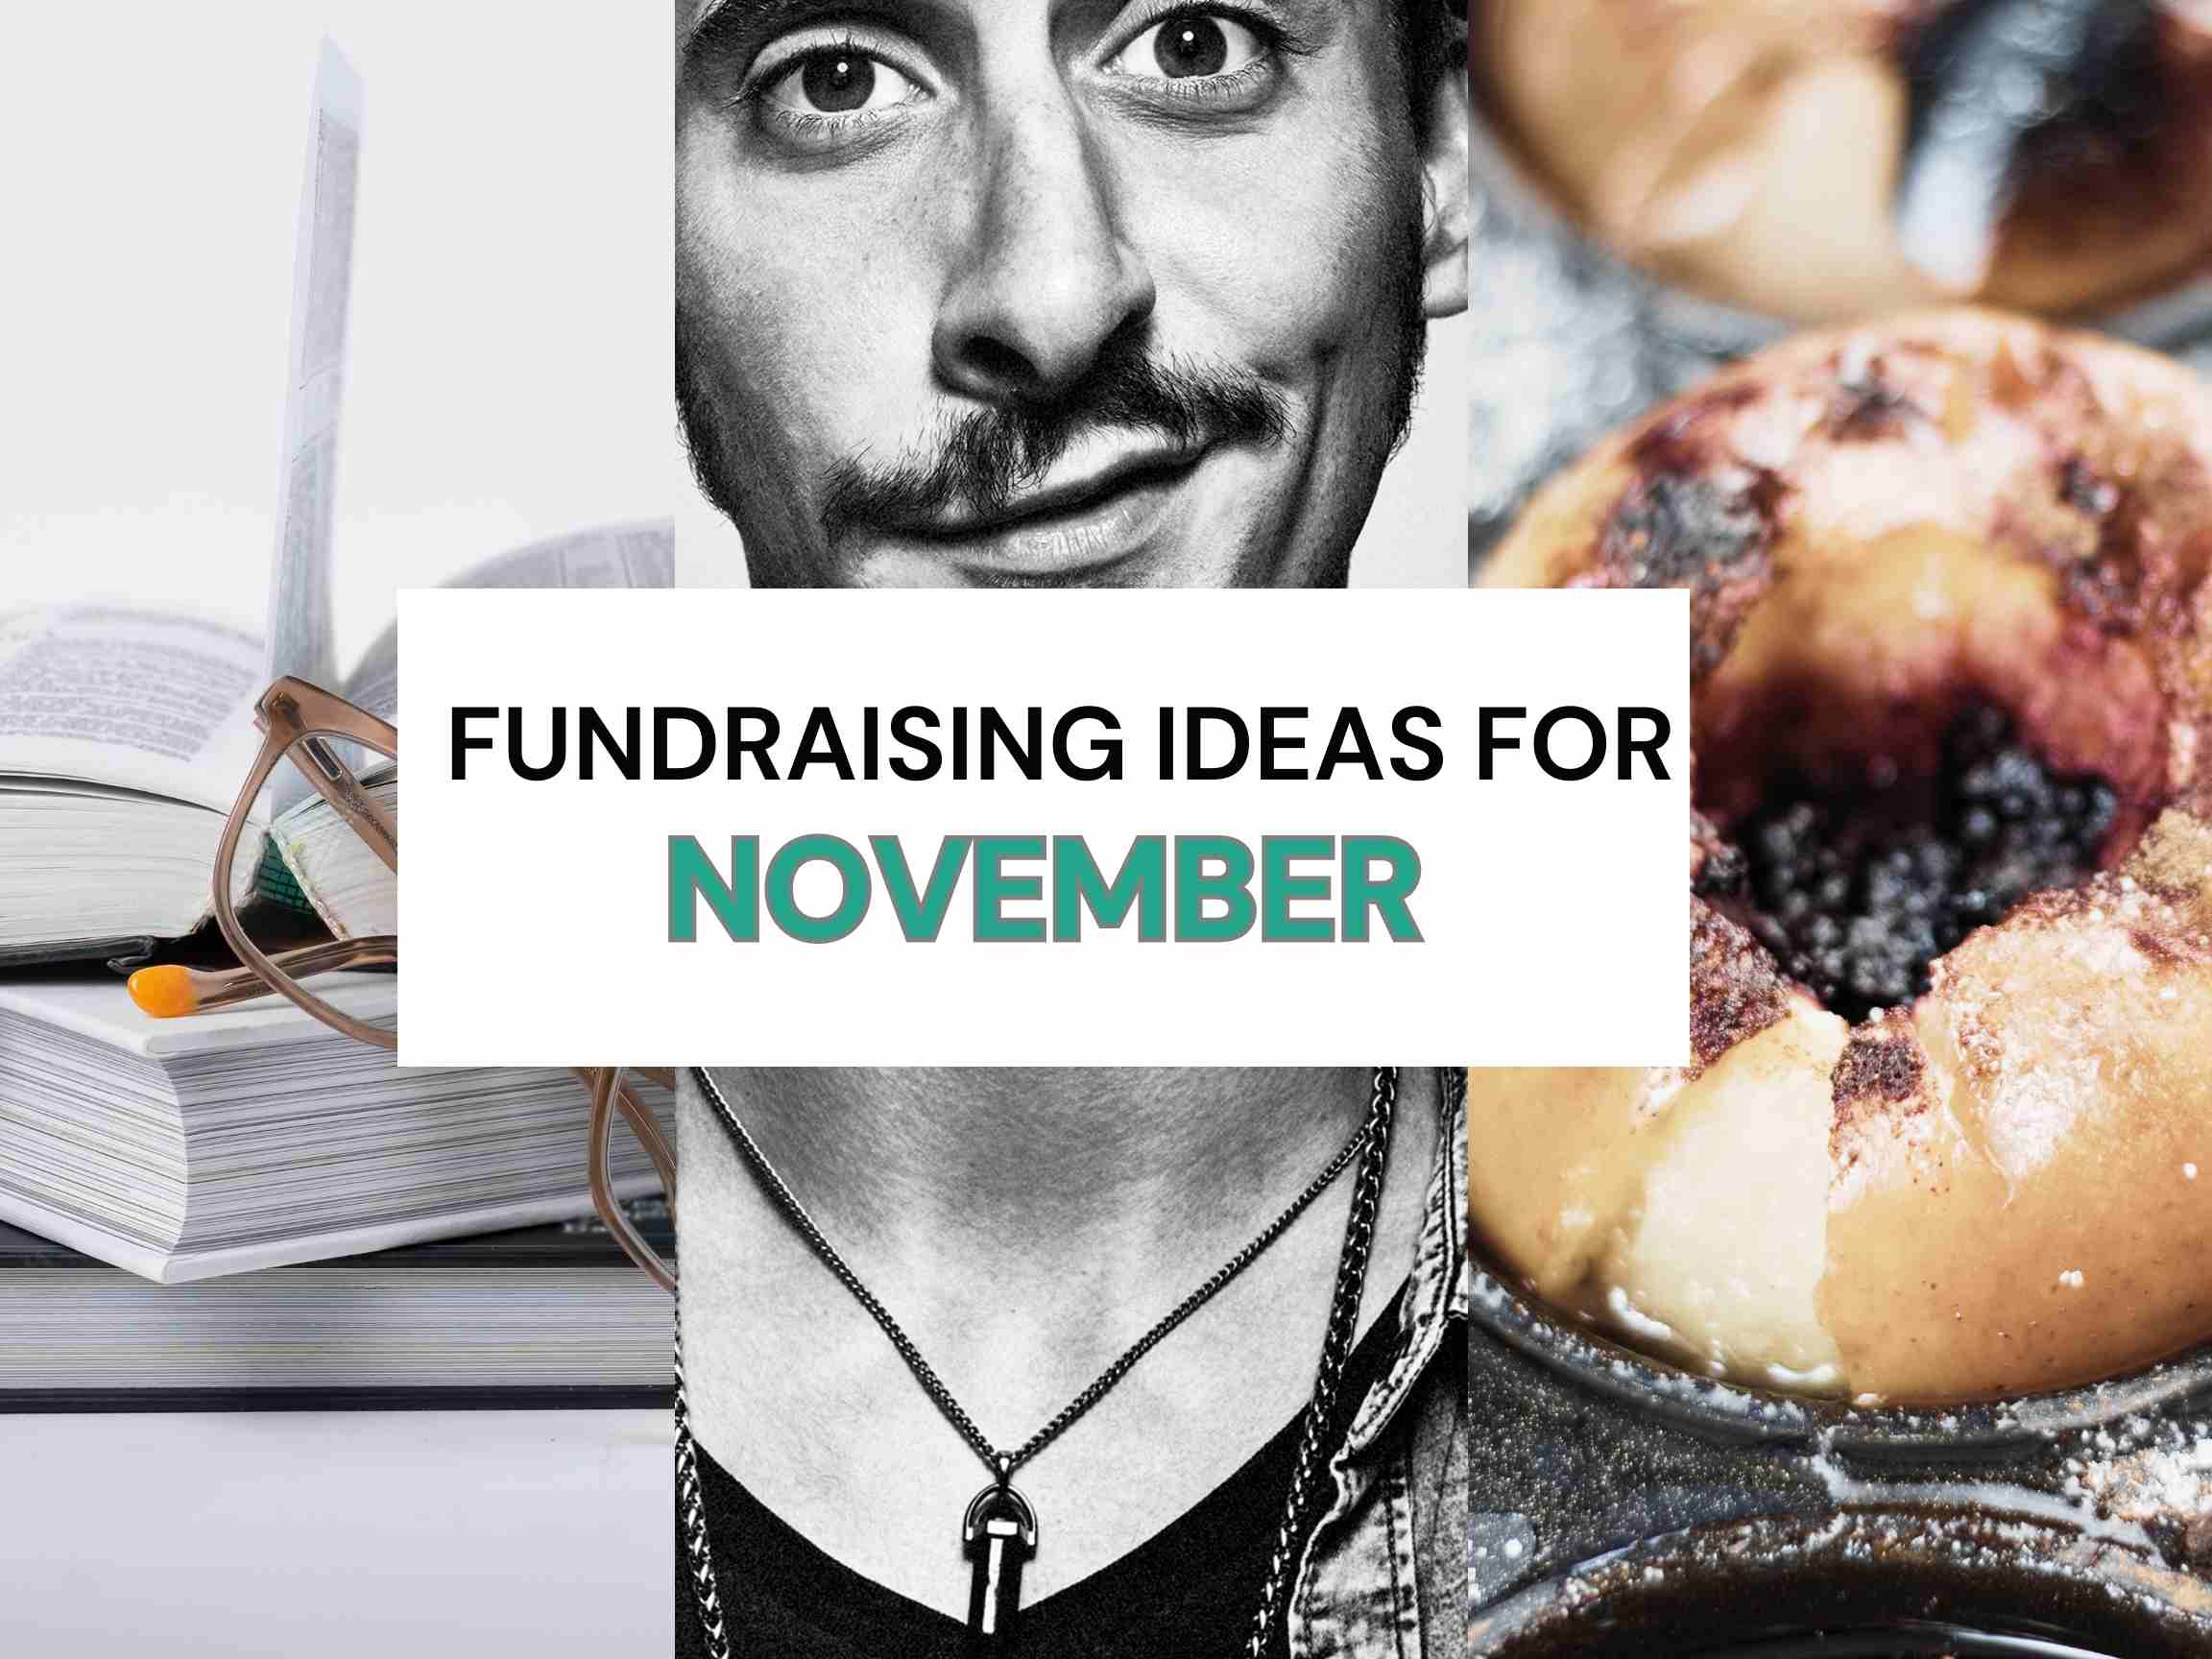 Fundraising ideas for november